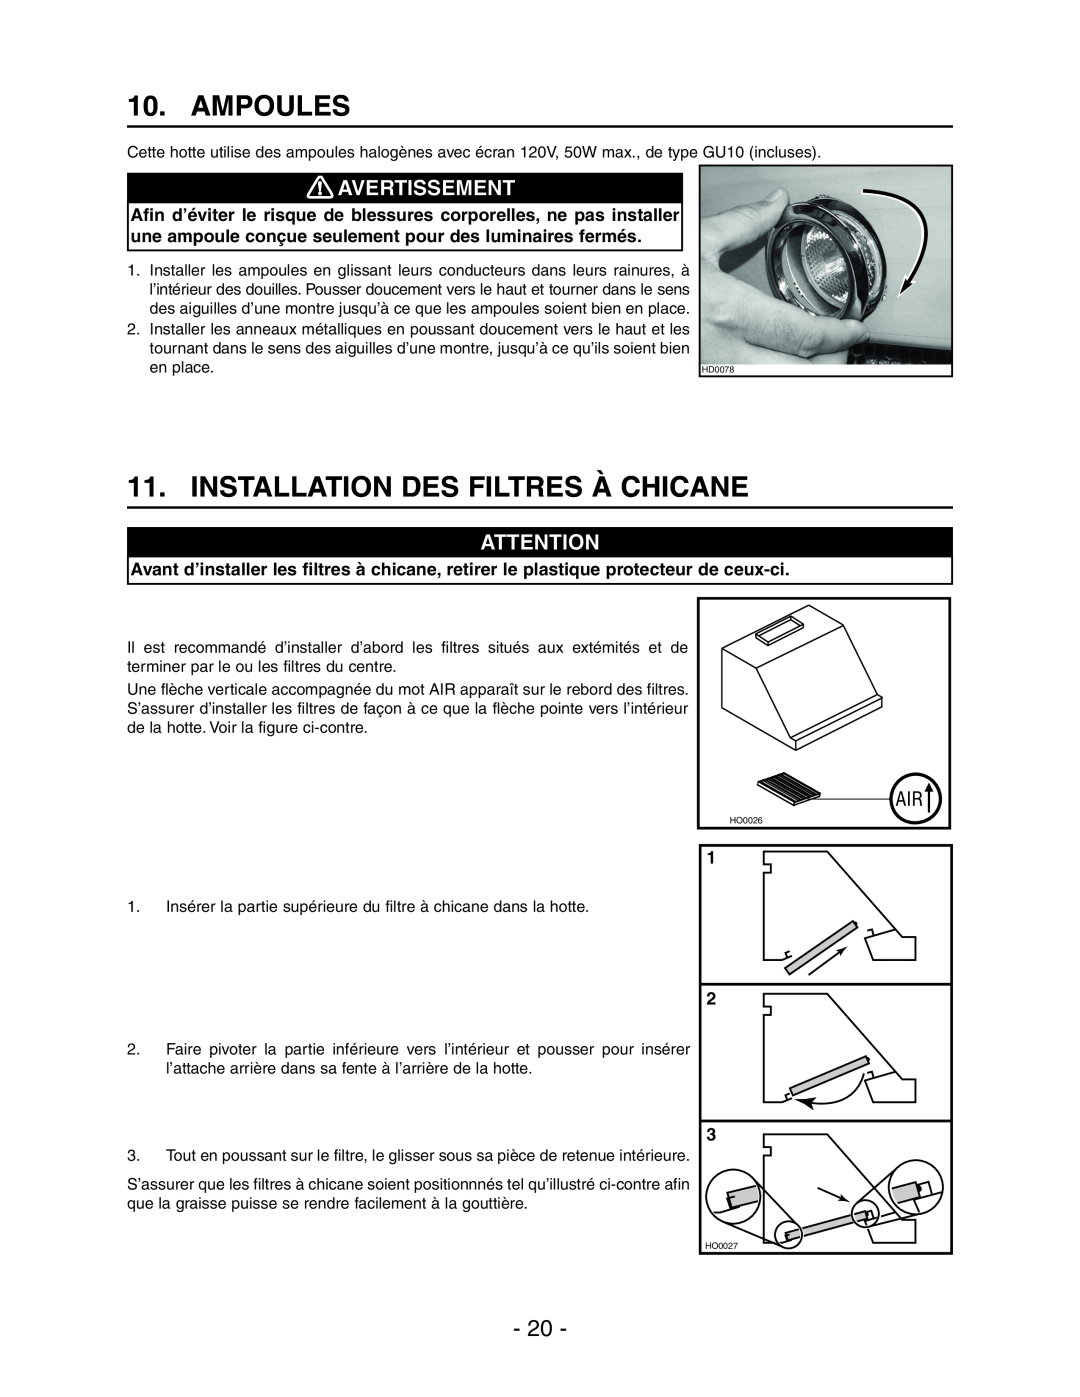 Best WPD28I installation instructions Ampoules, Installation Des Filtres À Chicane, Avertissement 